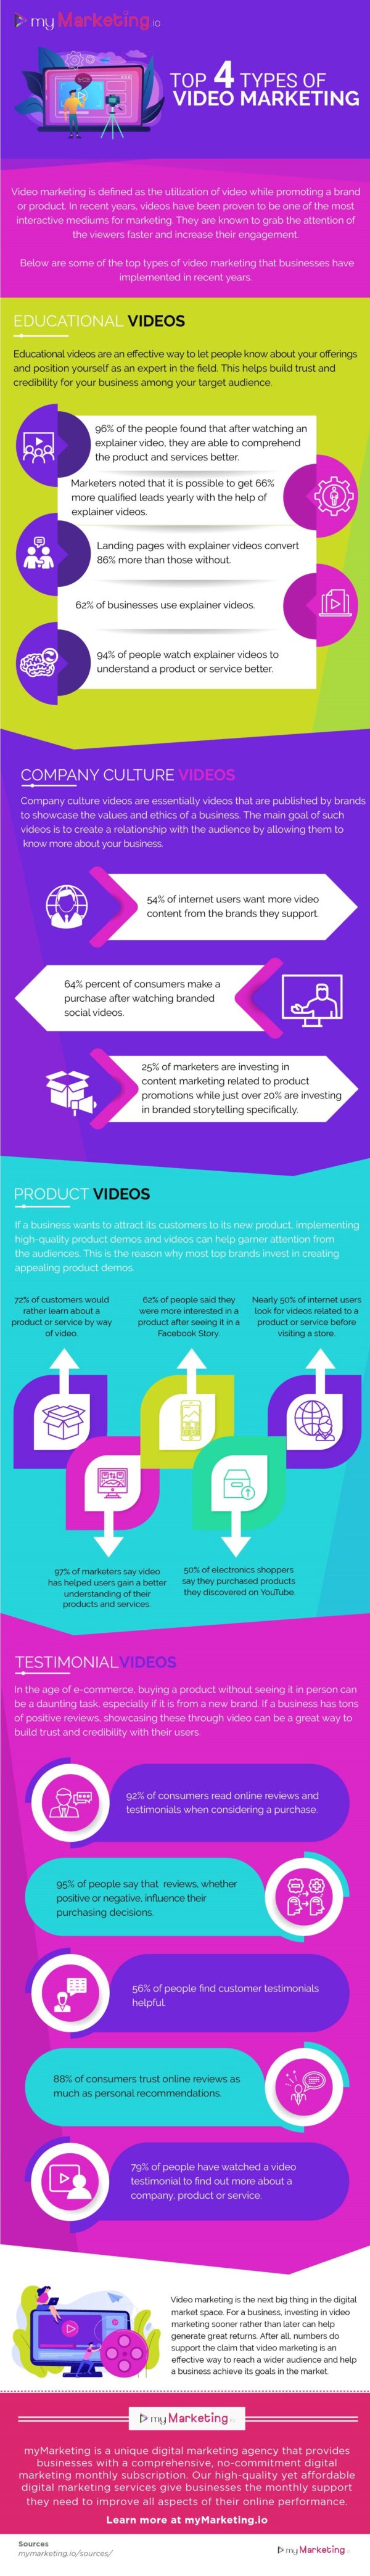 Video Marketing Infographic | myMarketing